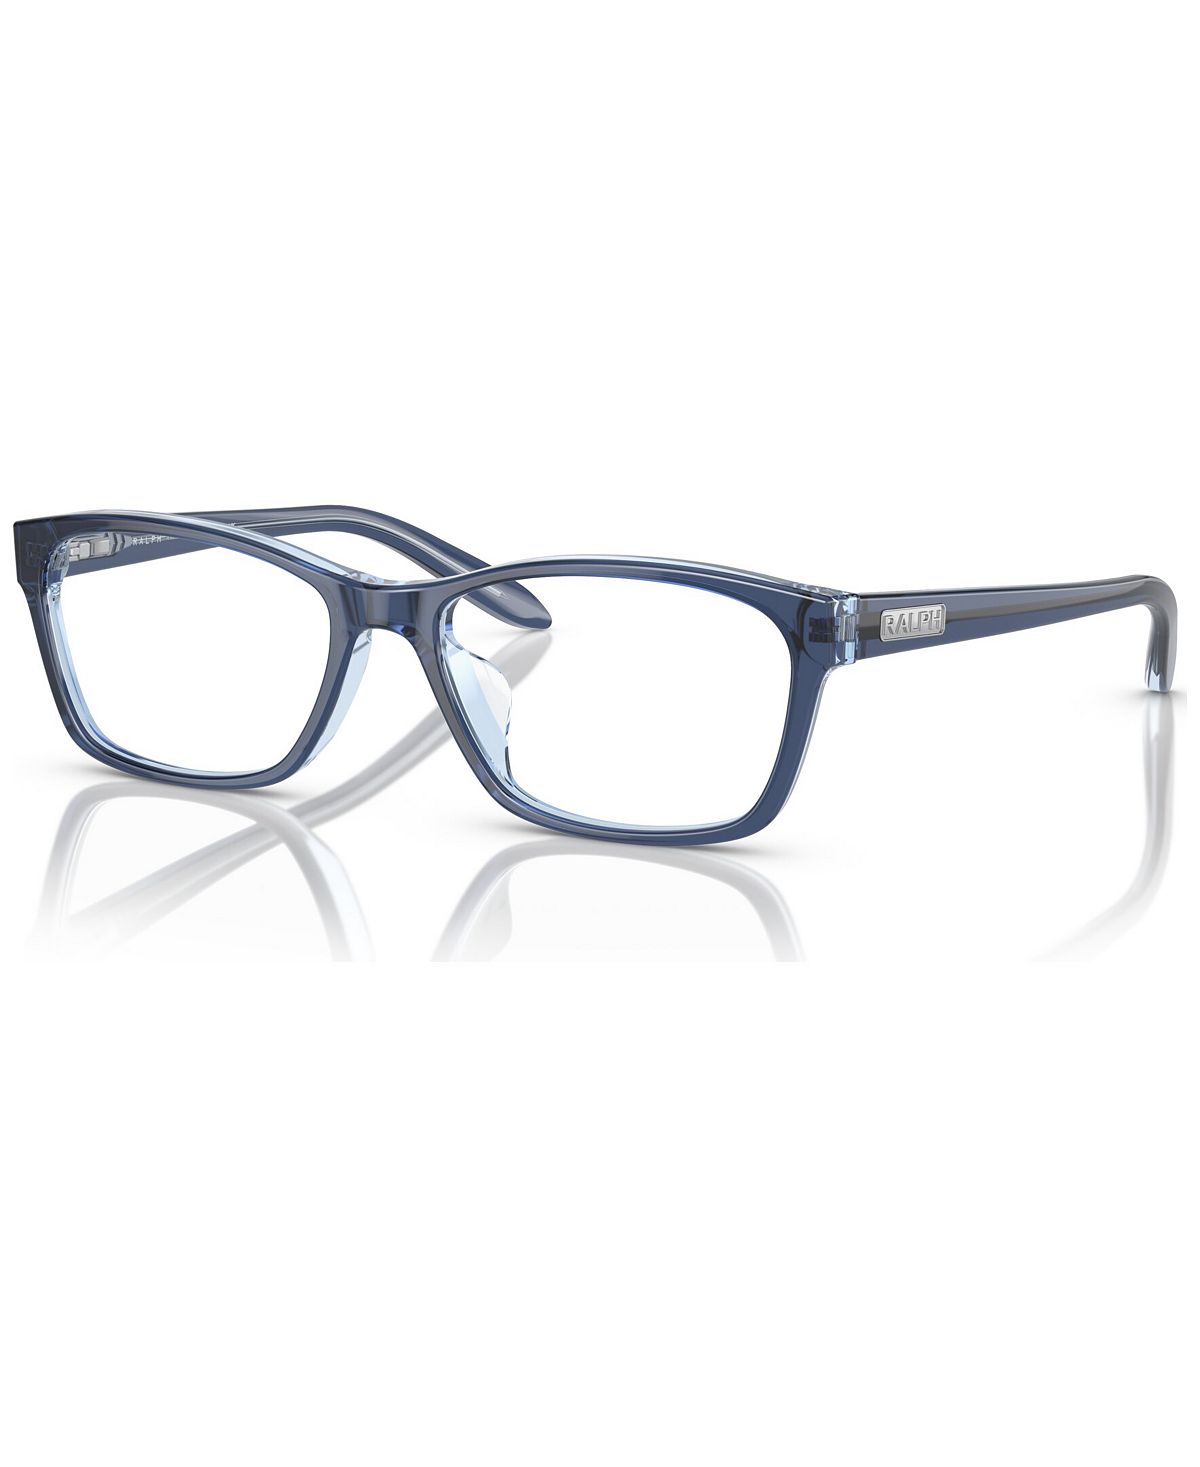 цена Женские квадратные очки, RA7039 53 Ralph by Ralph Lauren